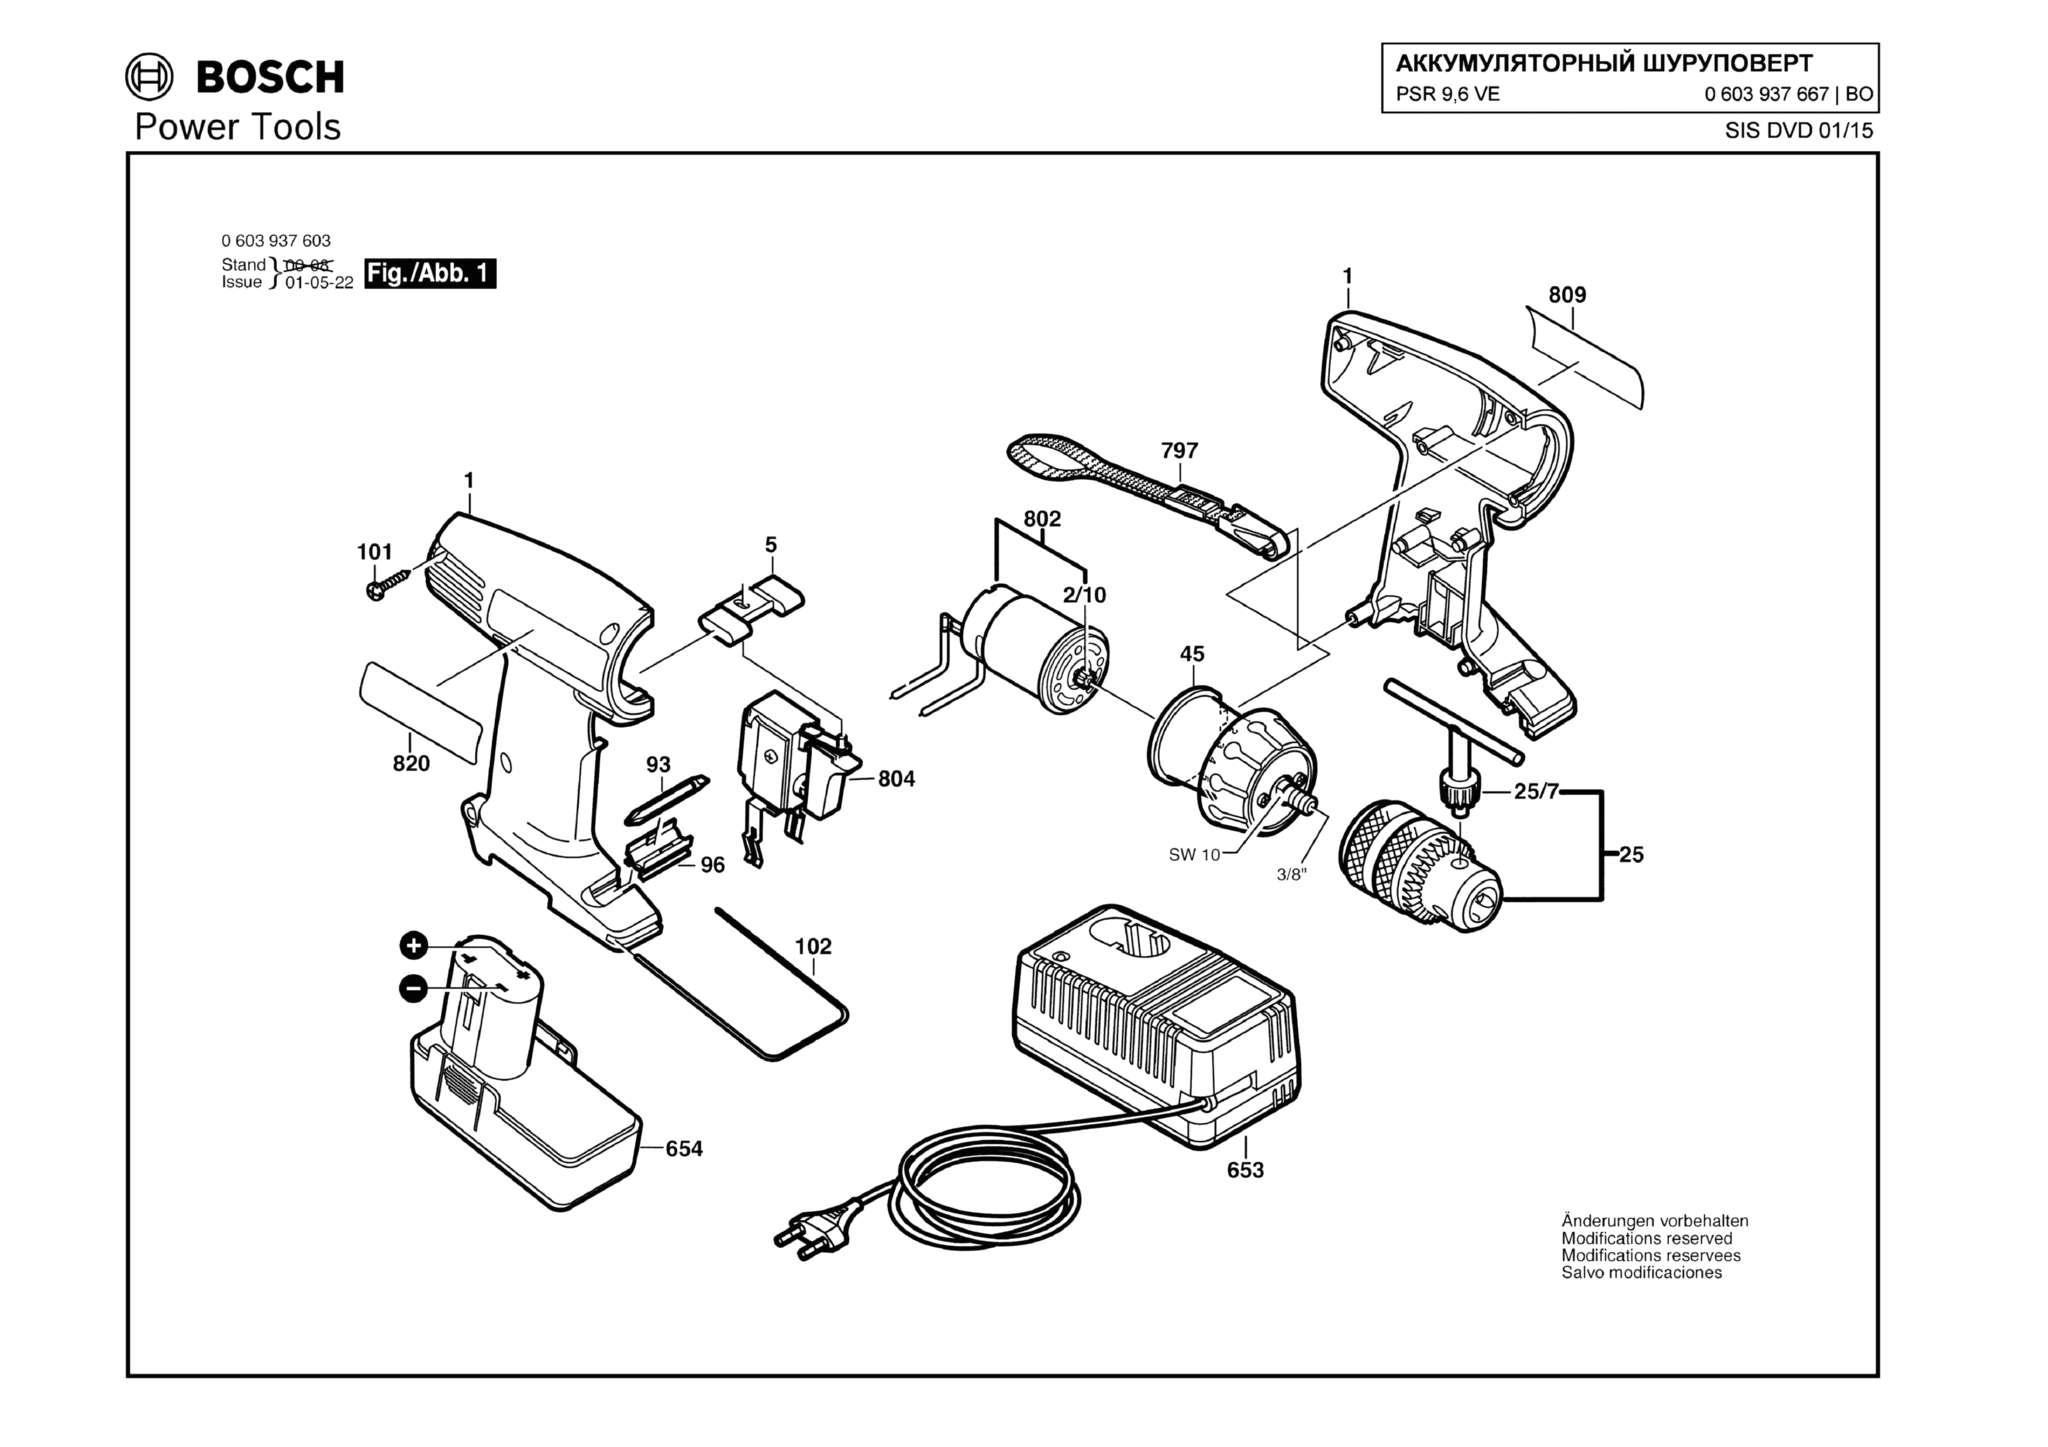 Запчасти, схема и деталировка Bosch PSR 9,6 VE (ТИП 0603937667)